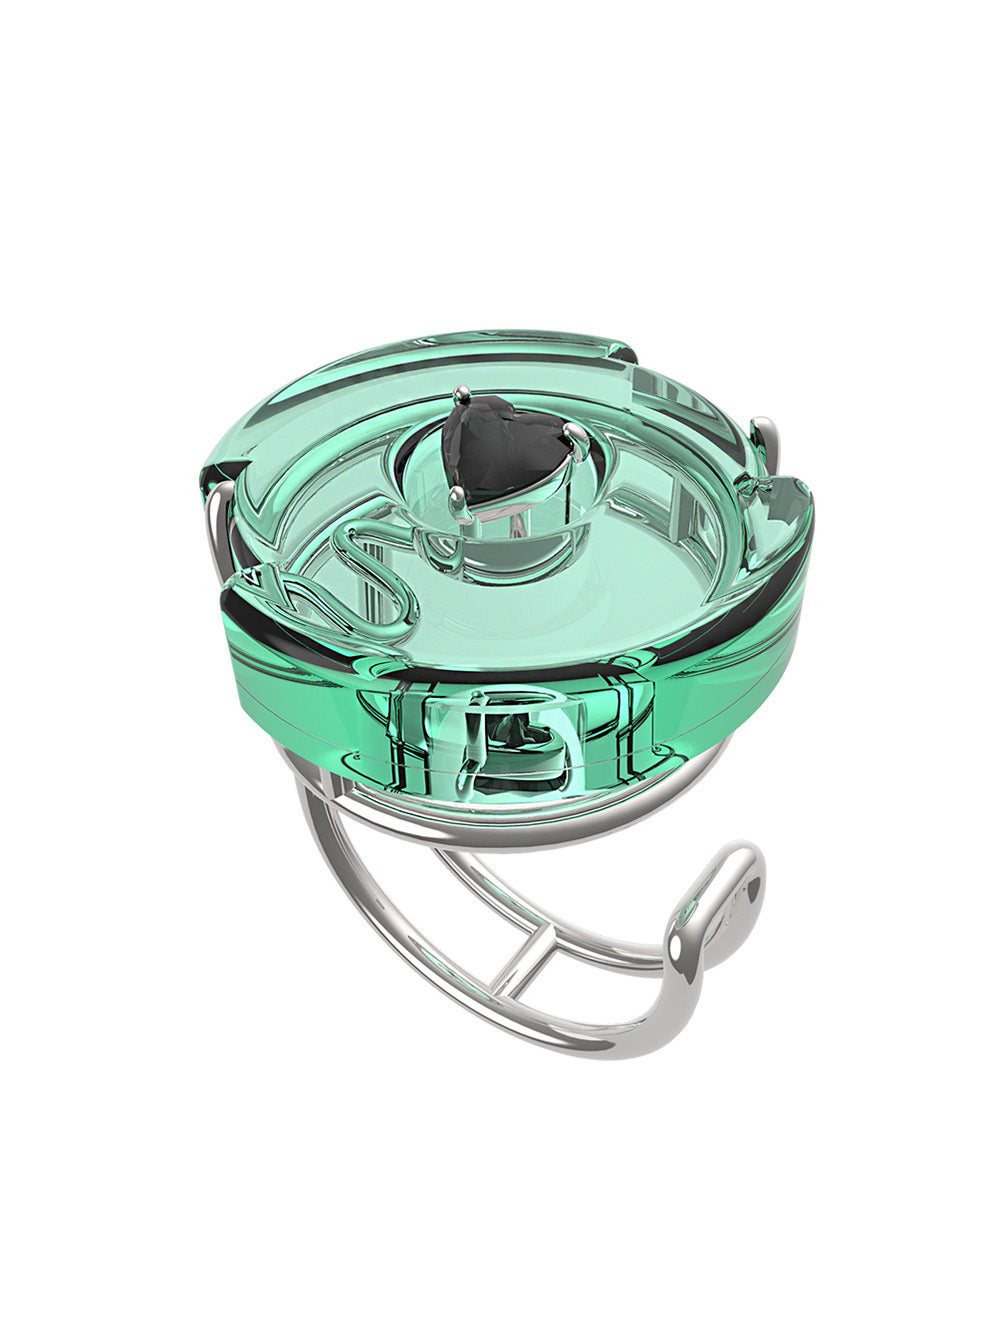 MUKTANK X GEL E LUA Futuristic Green Crystal Open Ring